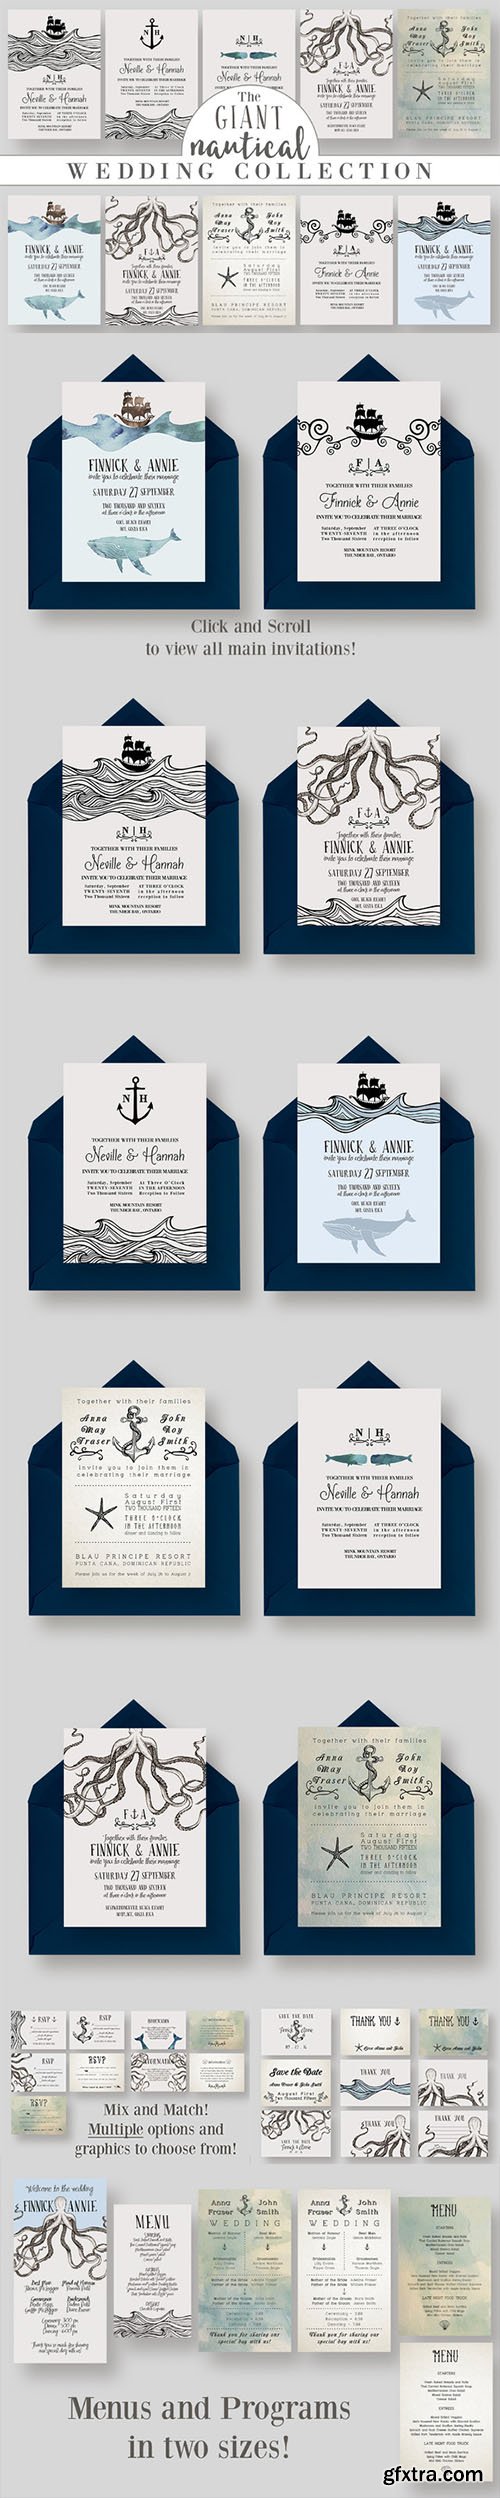 GIANT Nautical Wedding Collection - CM 340161